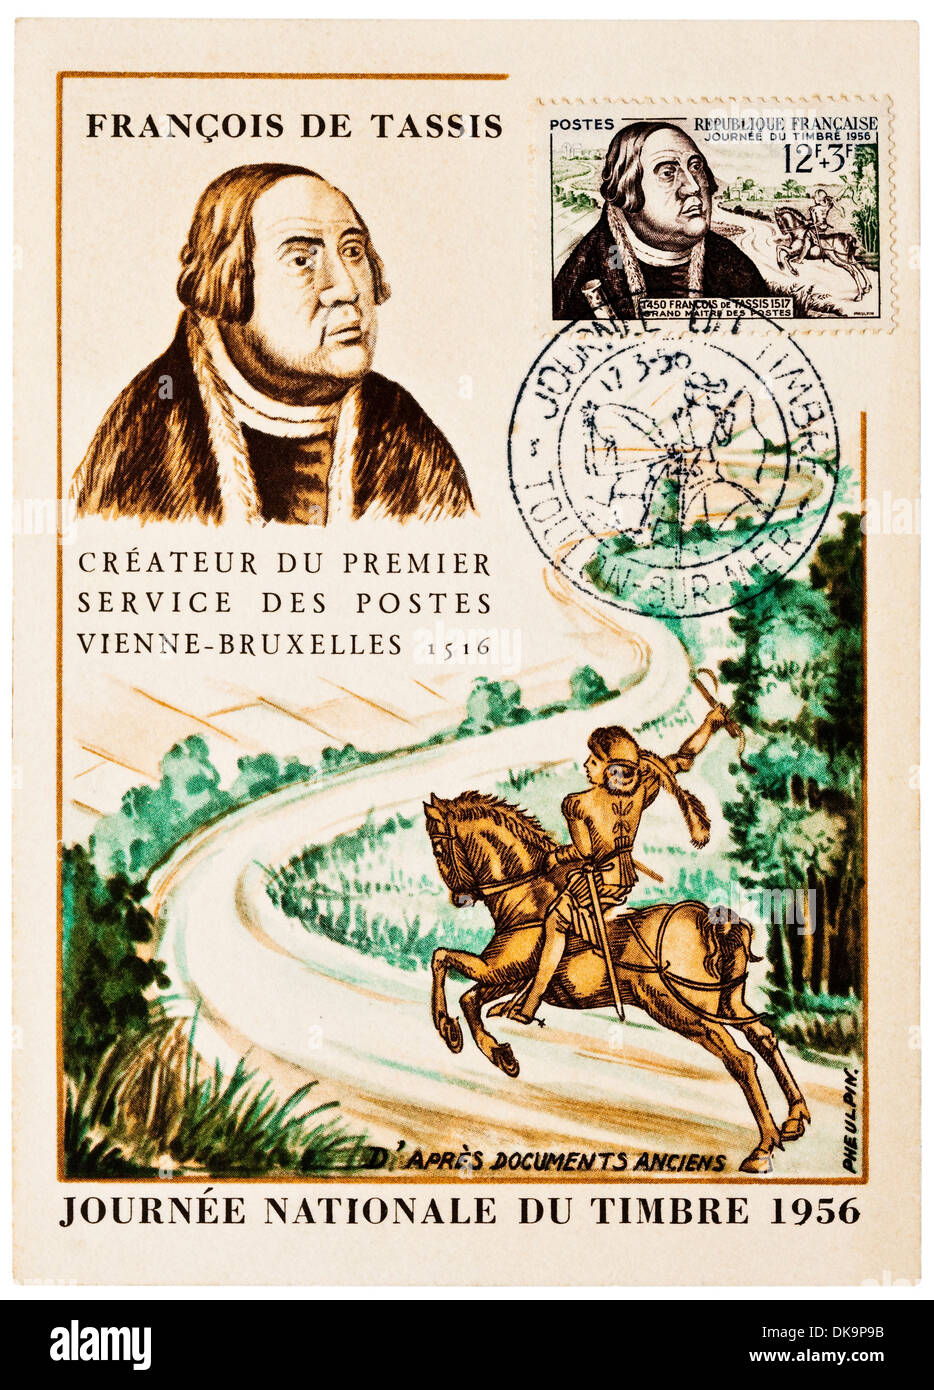 1956 französische Postkarte mit Francois de Tassis, 1516 - Journée du Timbre (Tag der Briefmarke). Stockfoto